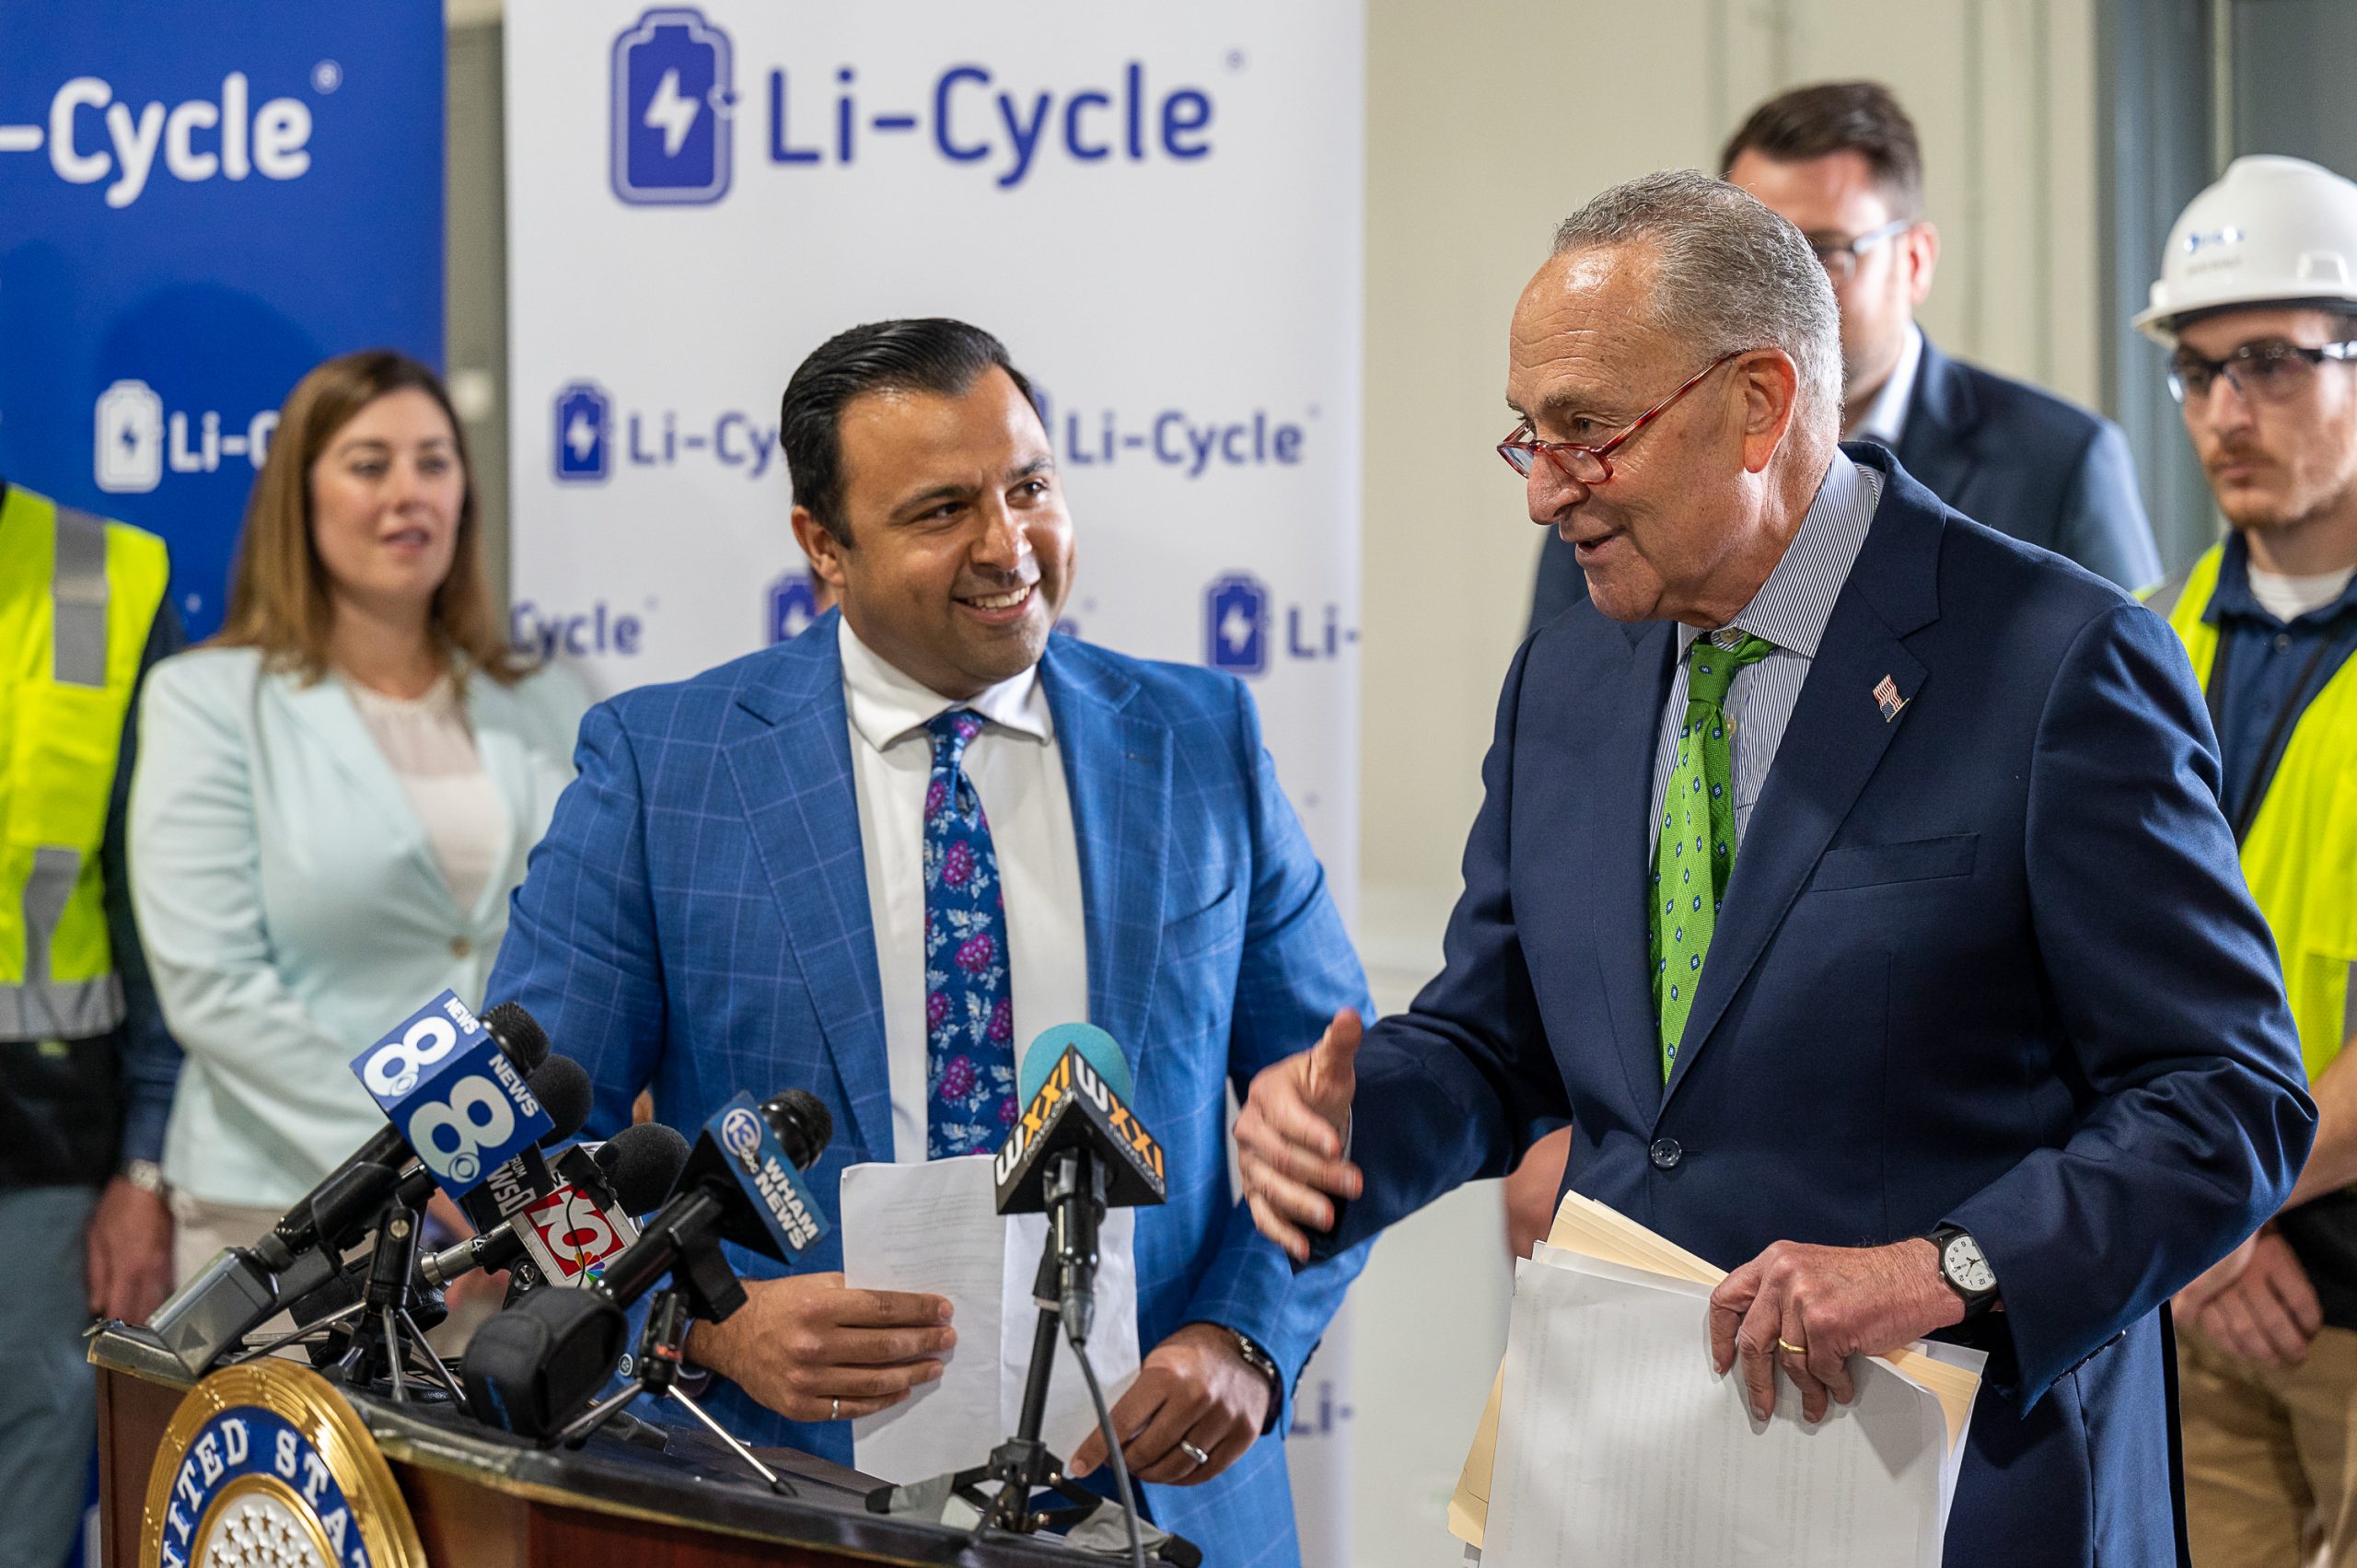 Senate Schumer and Li-Cycle's CEO & co-founder, Ajay Kochhar